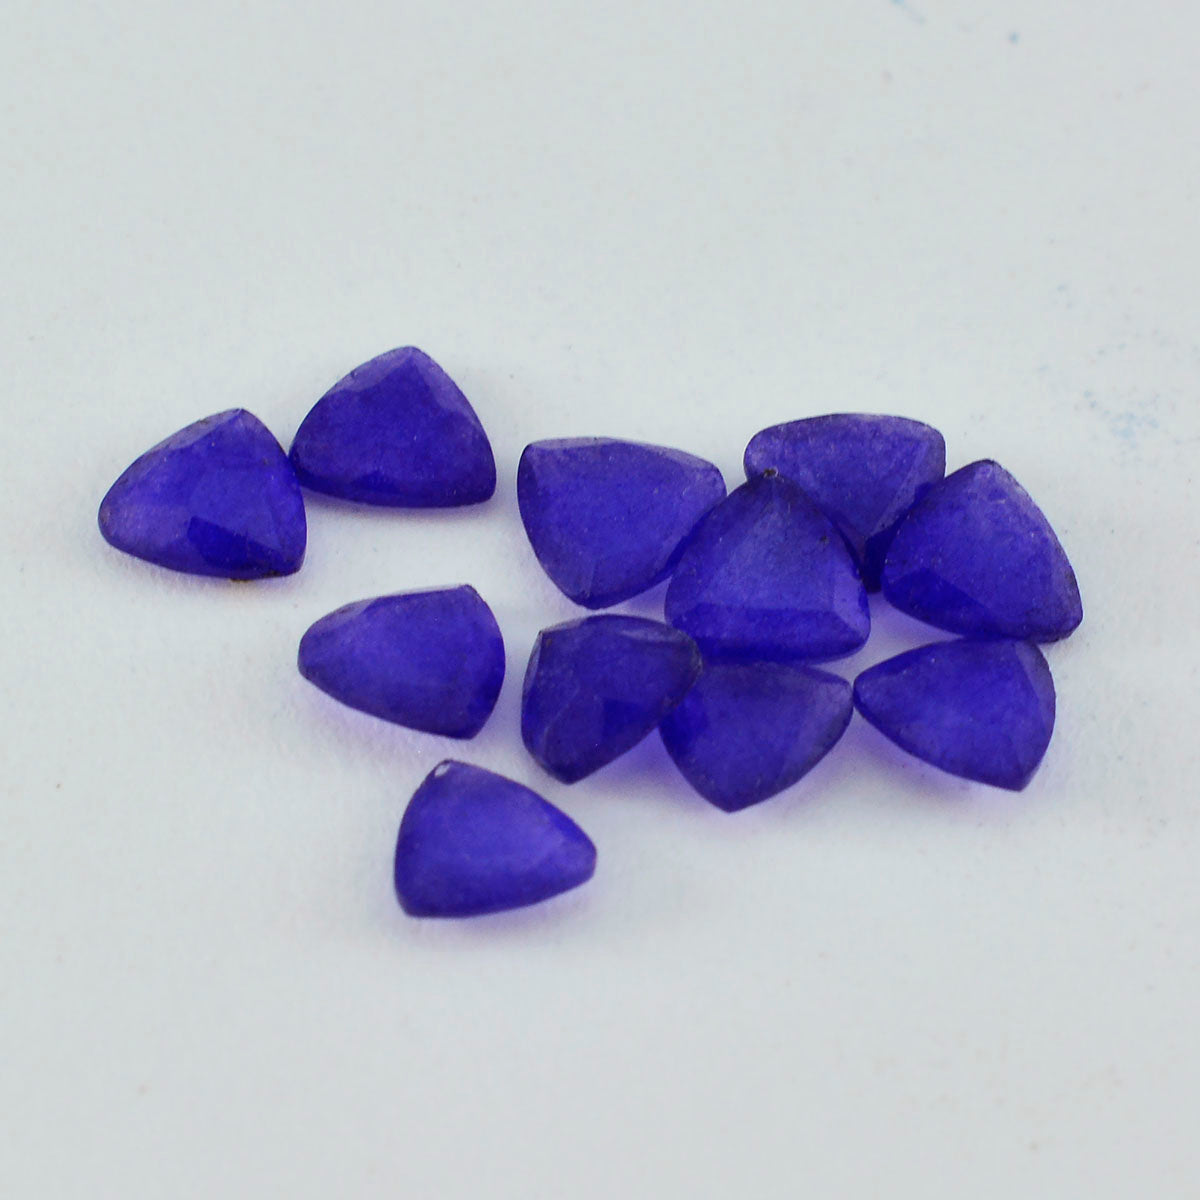 riyogems 1pc リアル ブルー ジャスパー ファセット 4x4 mm 兆形状の見栄えの良い品質の石